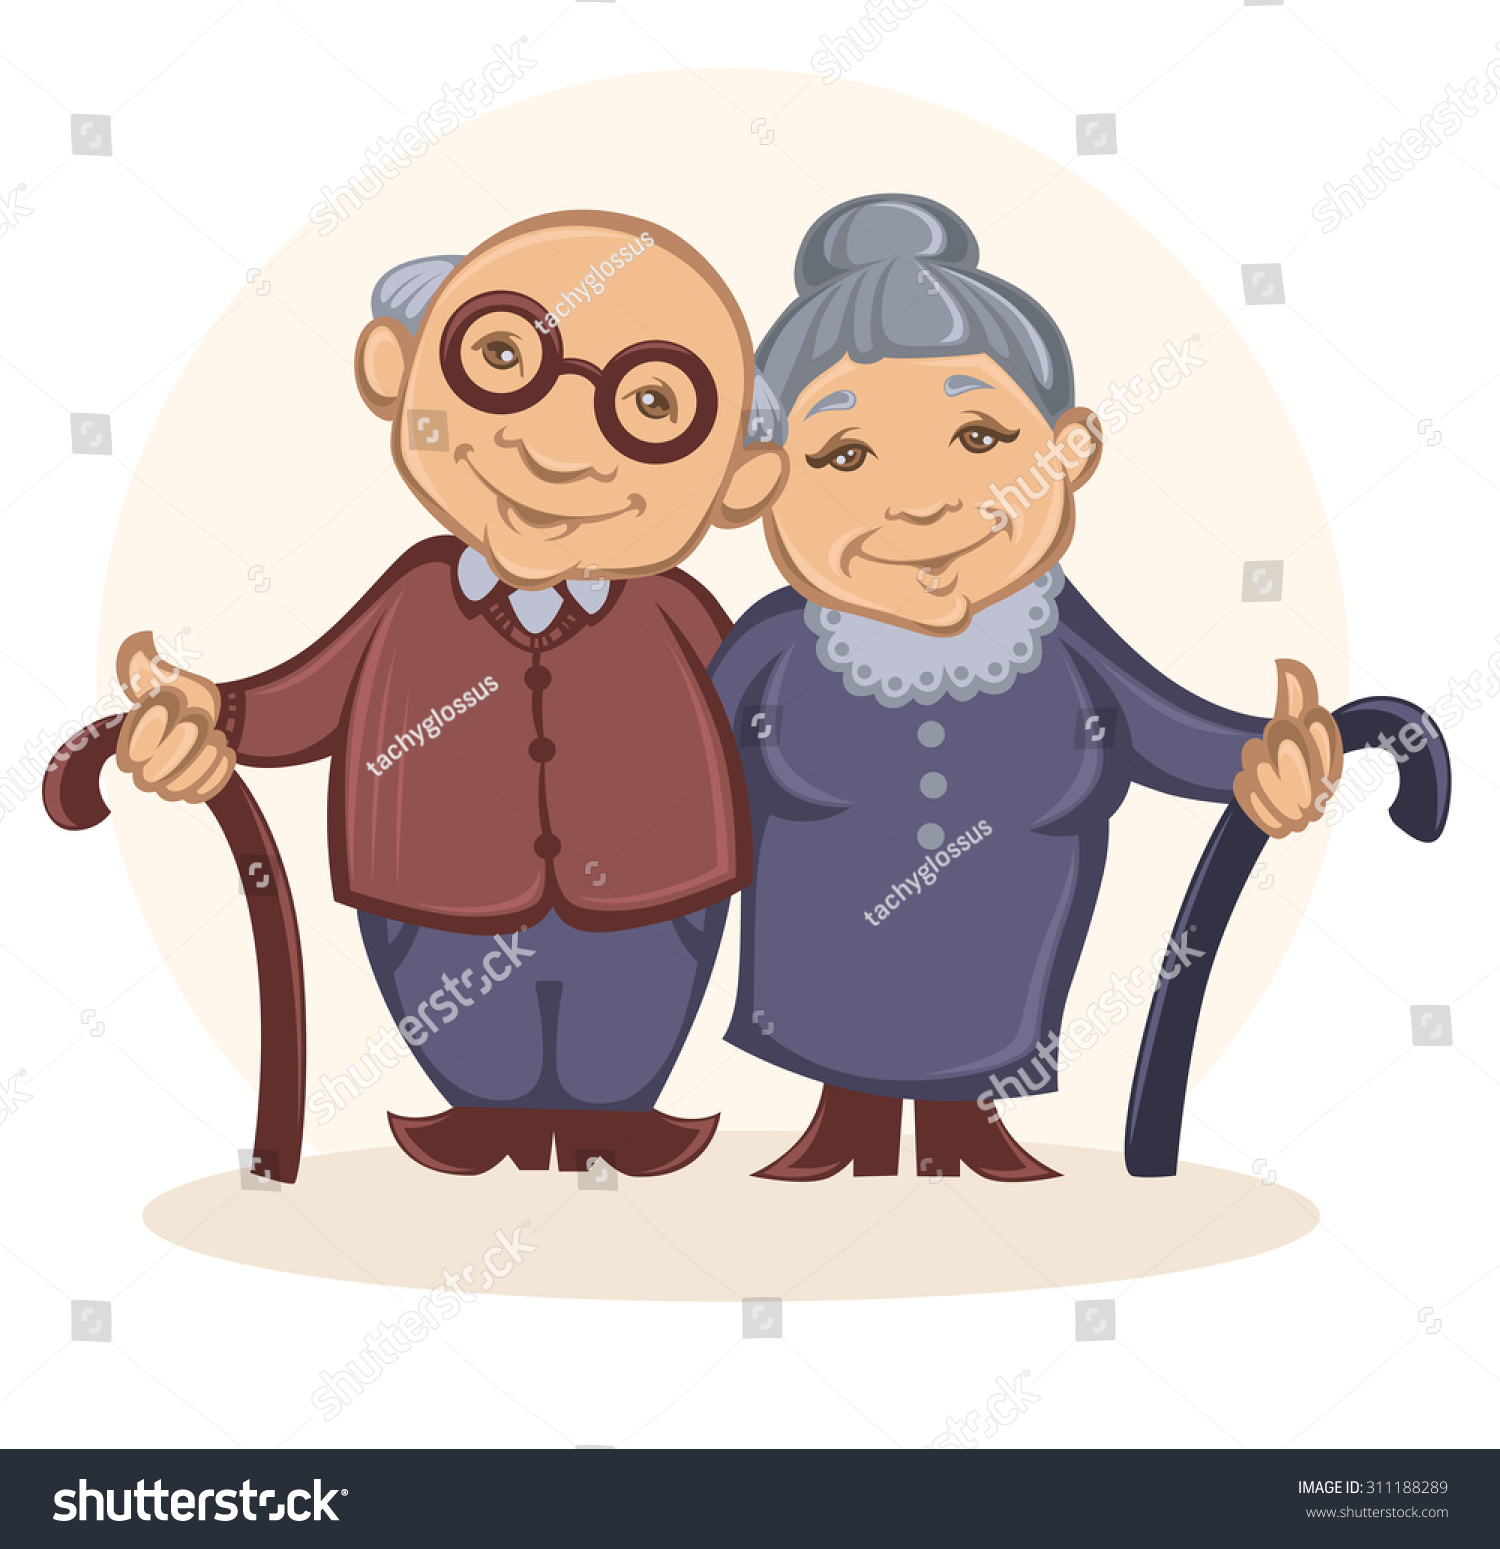 stock-vector-grandparents-vector-image-of-happy-old-people-in-cartoon-style-311188289.jpg